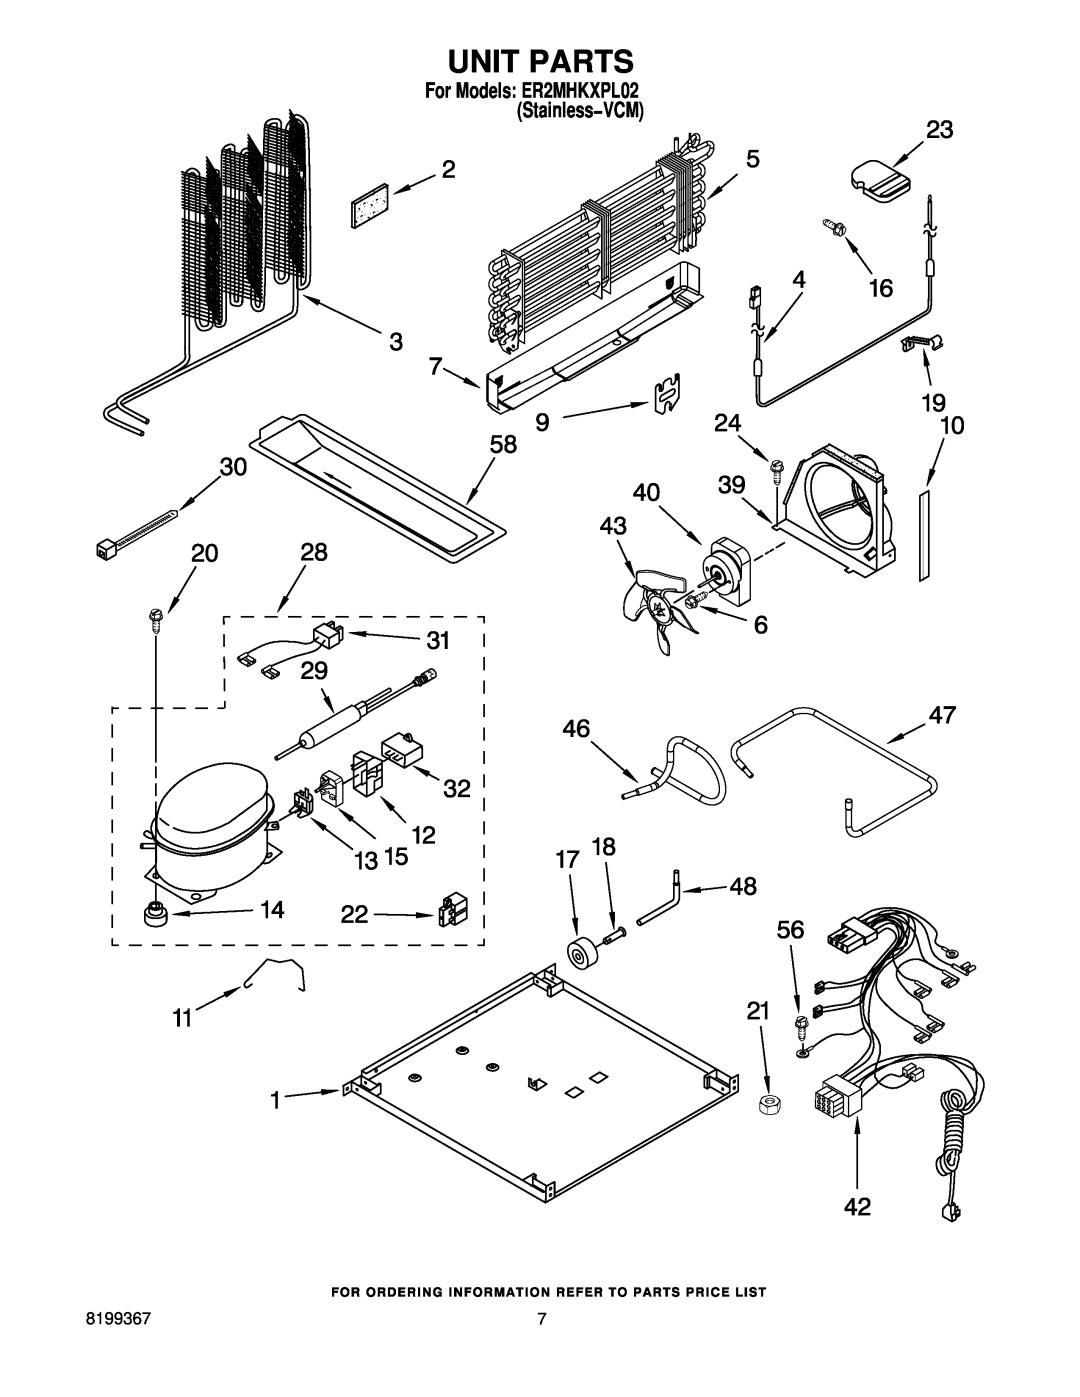 Whirlpool manual Unit Parts, For Models ER2MHKXPL02 Stainless−VCM 